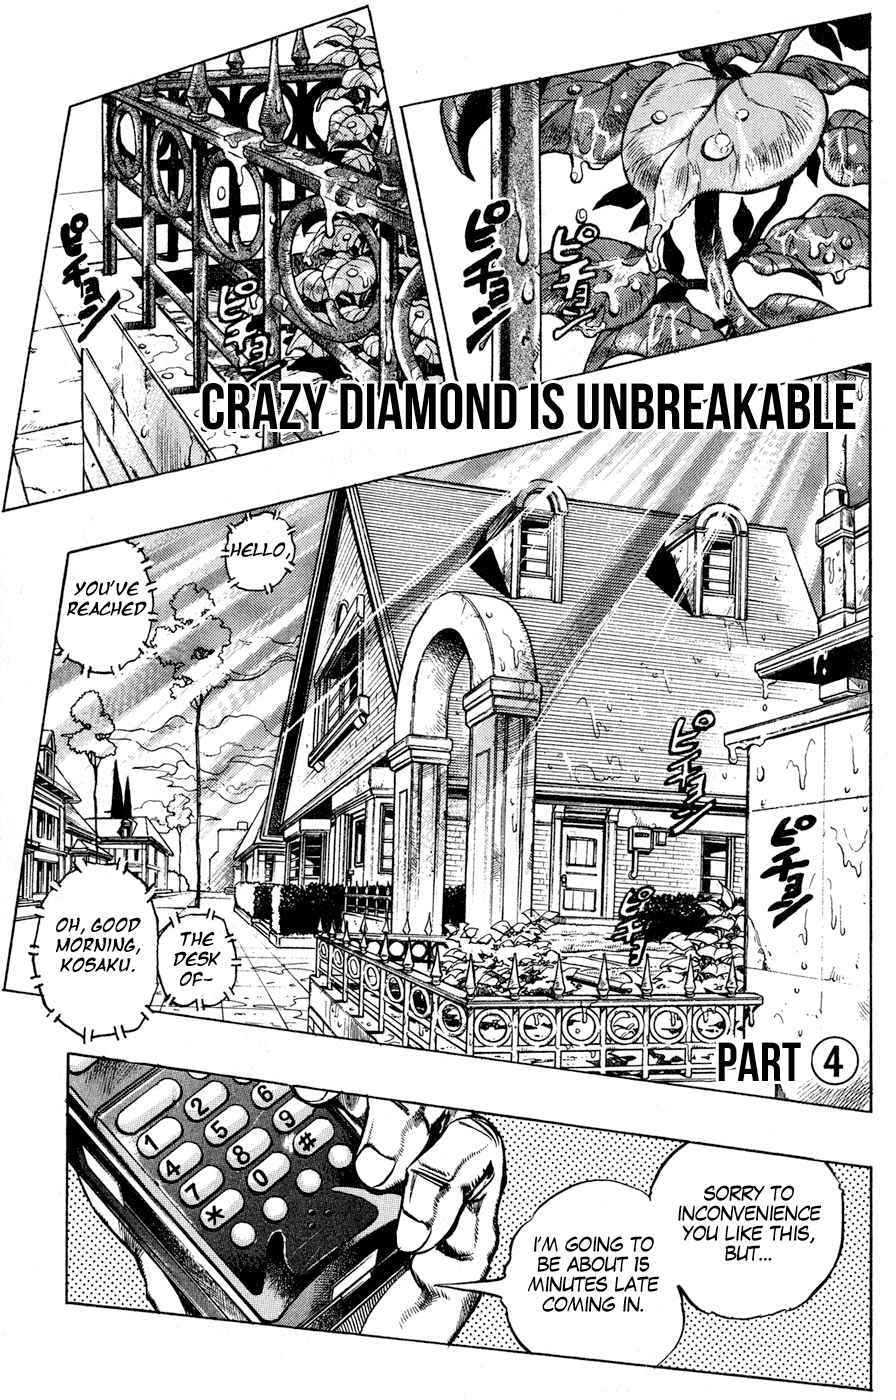 JoJo's Bizarre Adventure Part 4 Diamond is Unbreakable Vol. 18 Ch. 166 Crazy Diamond is Unbreakable Part 4